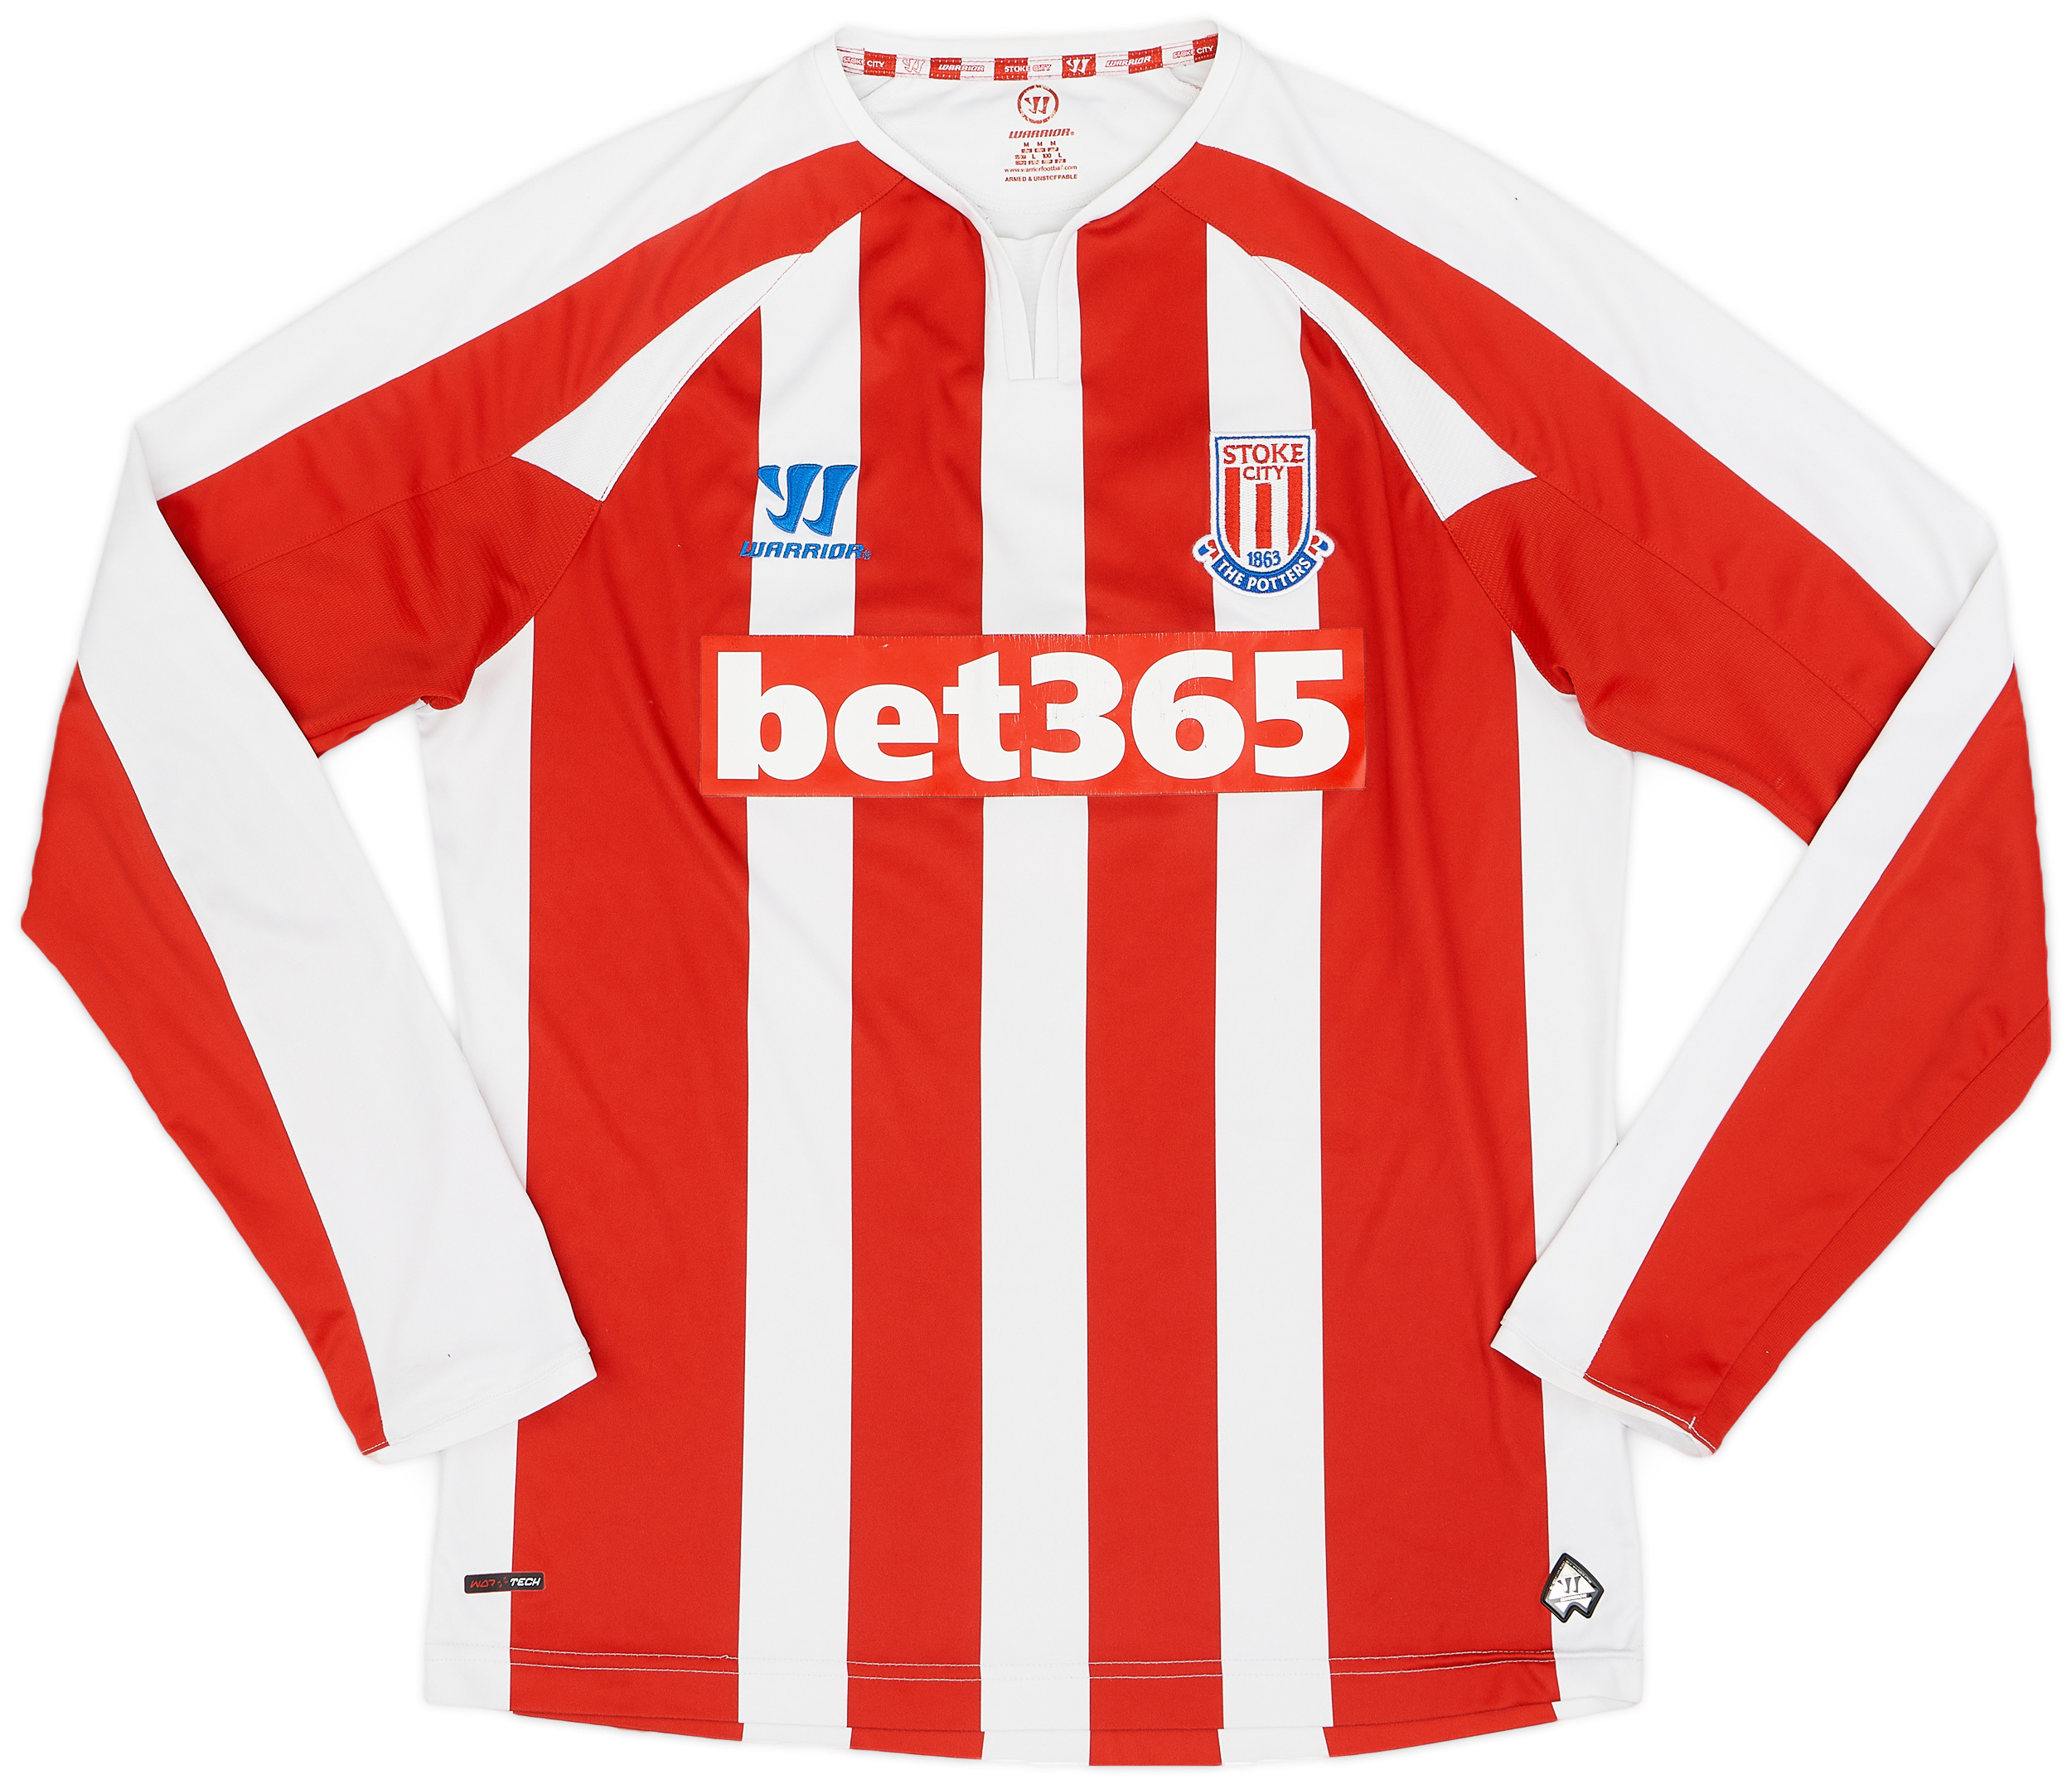 Stoke City  home футболка (Original)